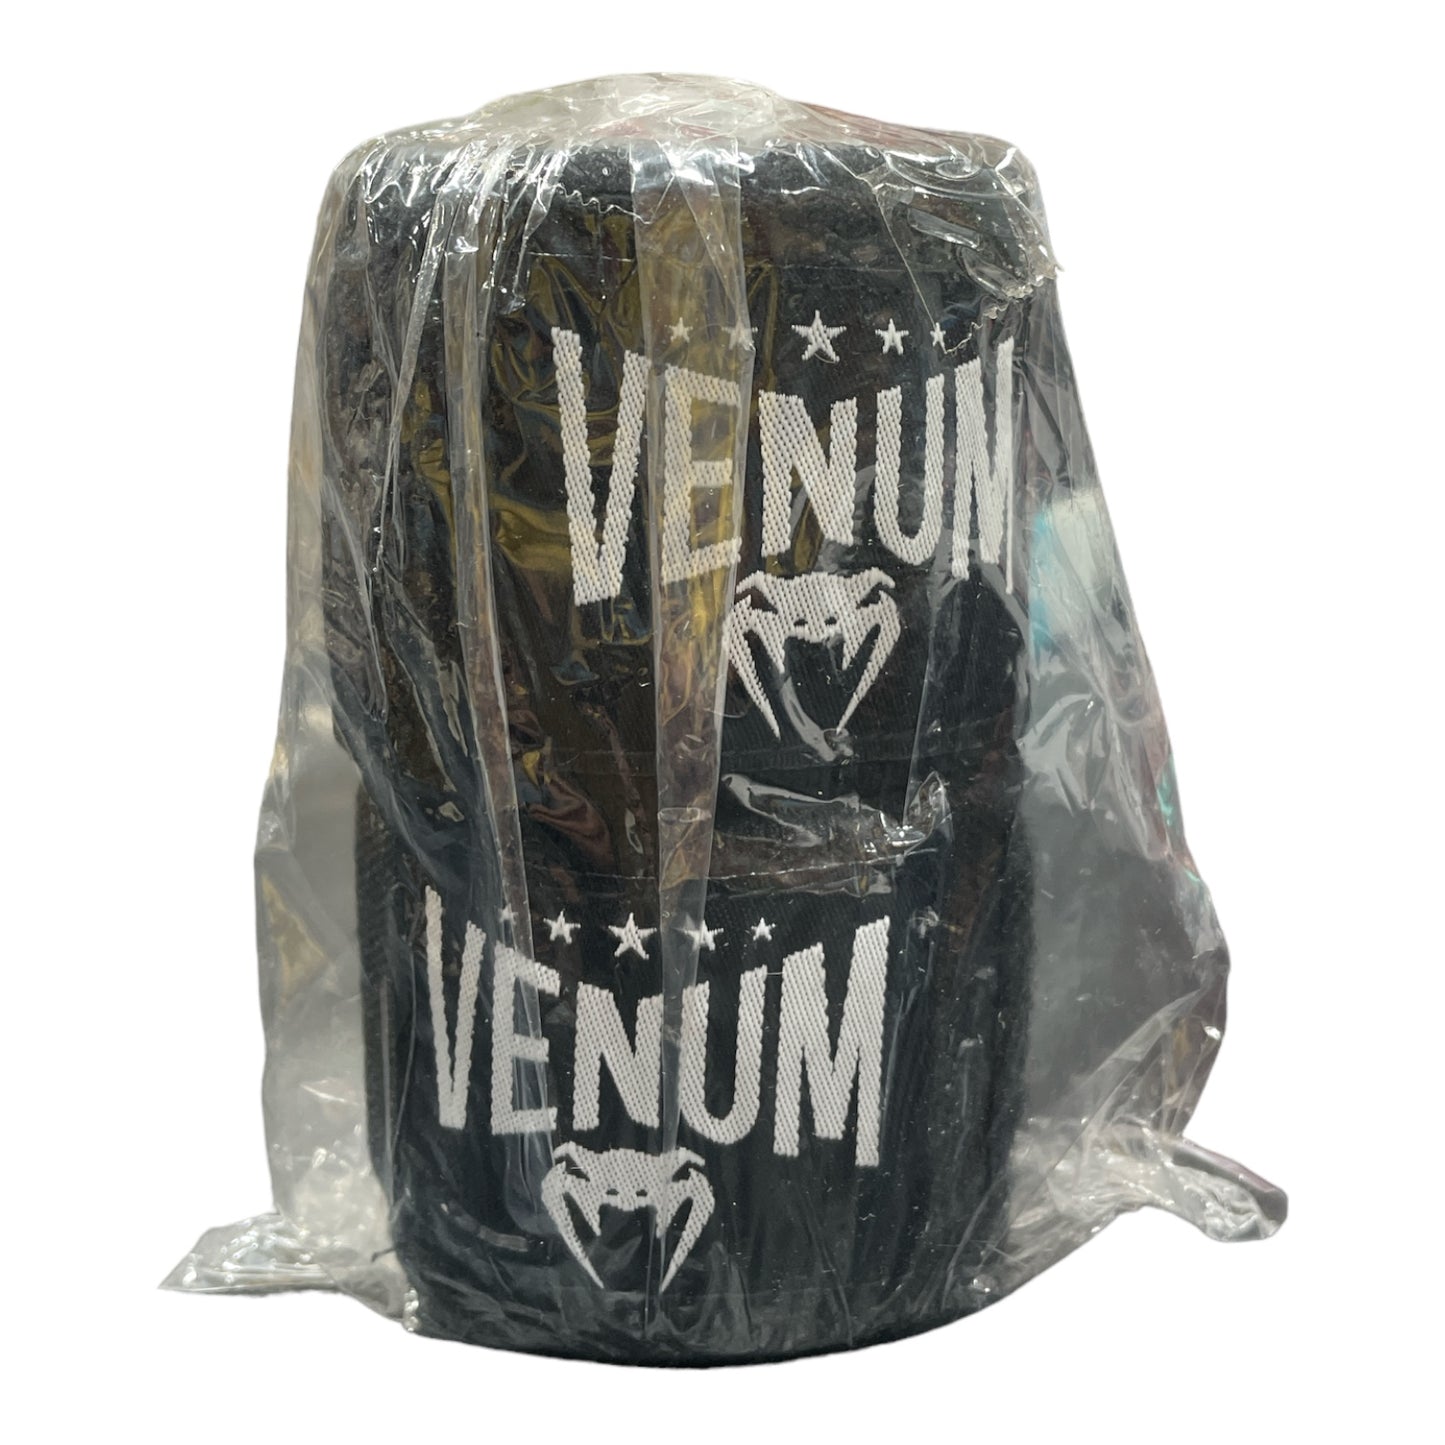 Venum Origins Reflex Boxing Kit, Adjustable Height Bag, Gloves & Handwraps